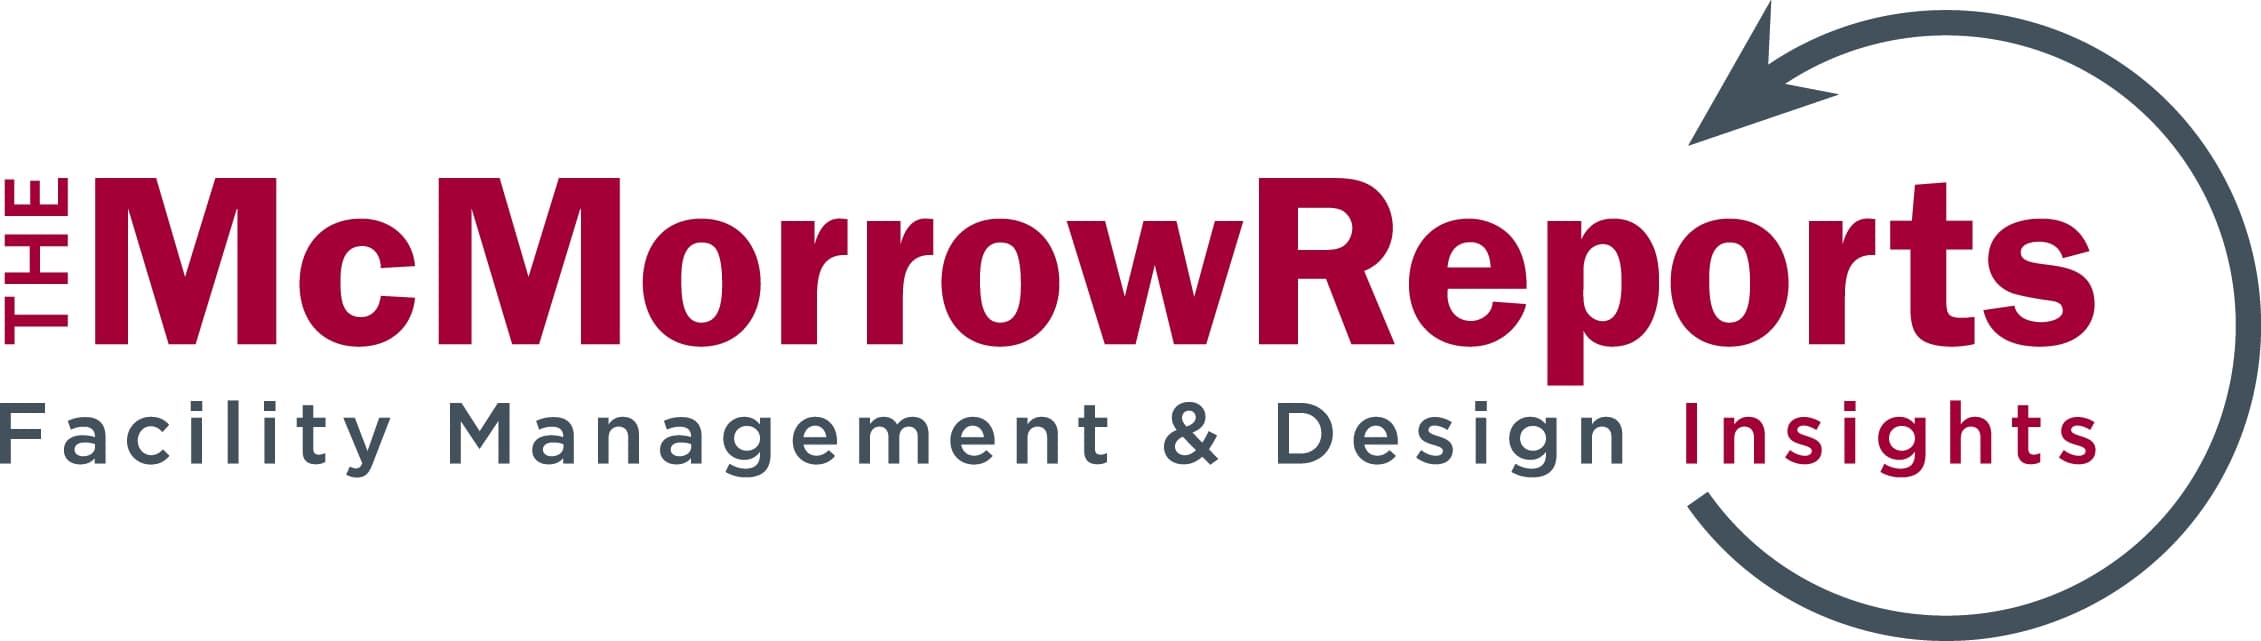 McMorrow Reports Logo